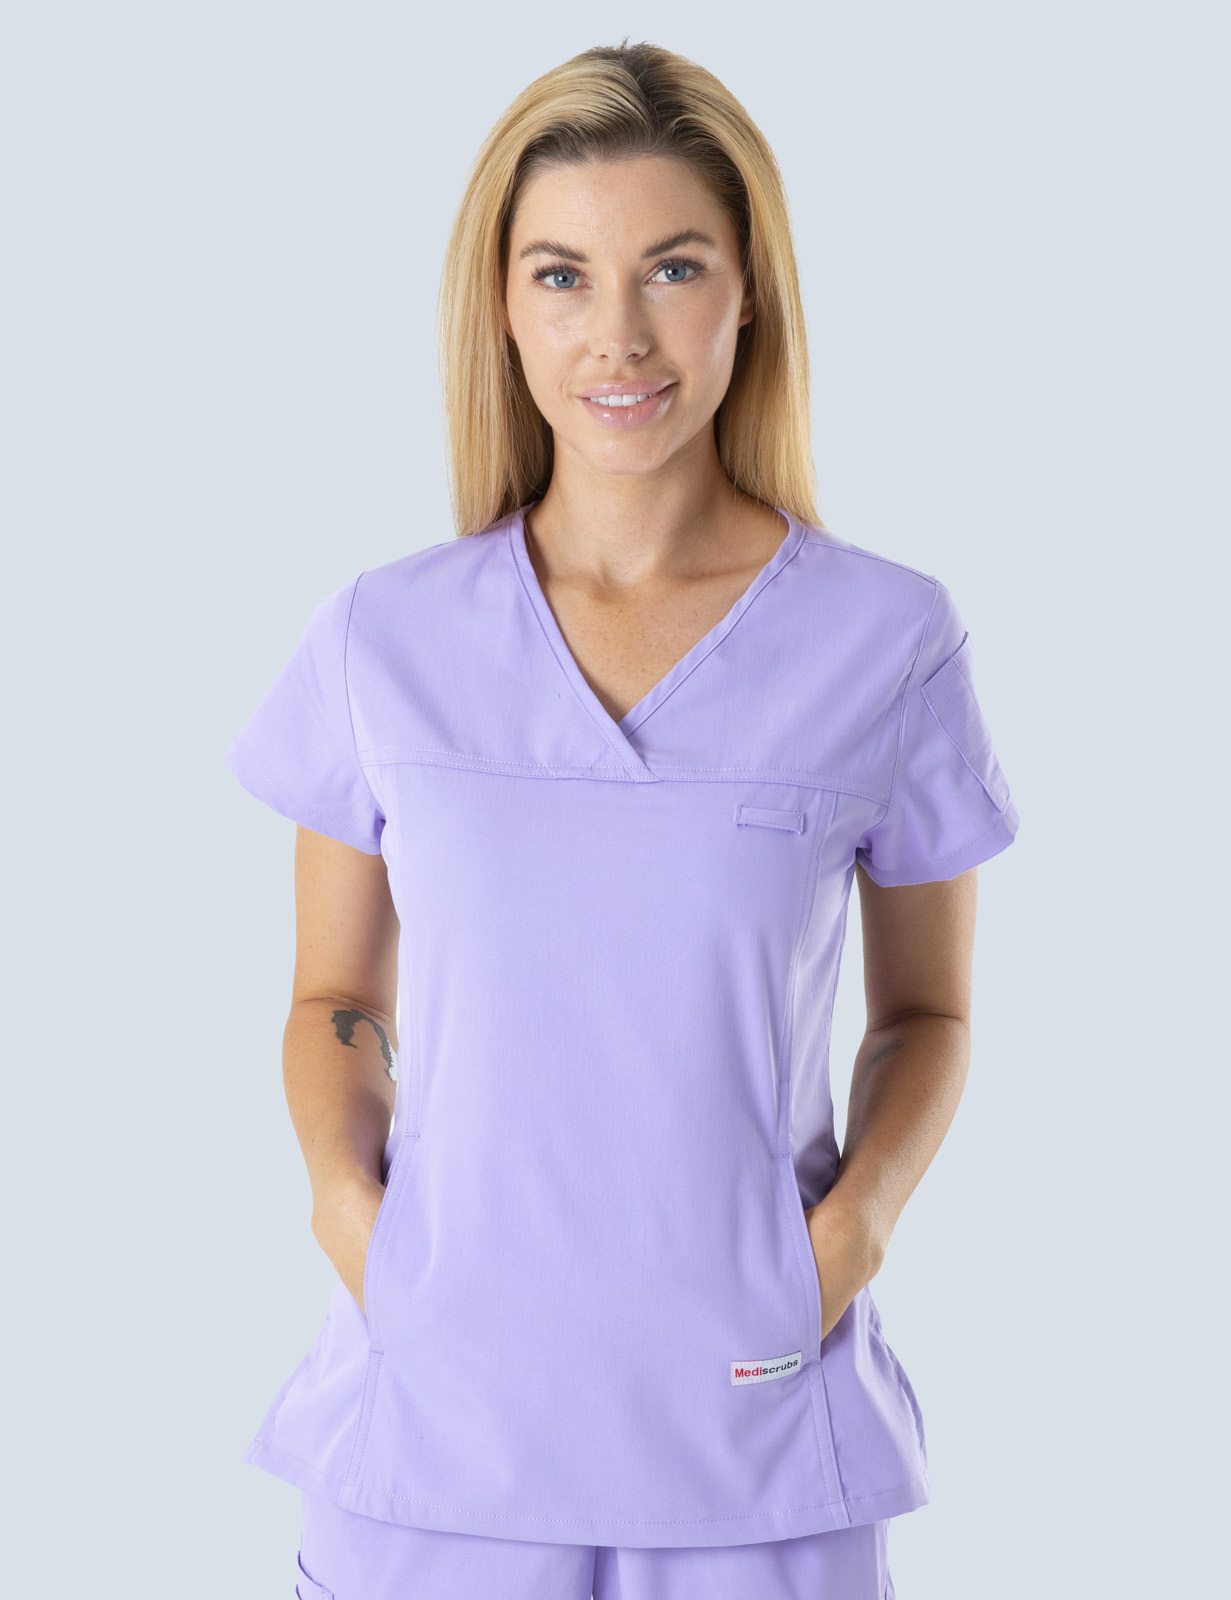 Queensland Children's Hospital Emergency Department Registered  Nurse  Uniform Top Bundle  (Women's Fit Top in Lilac incl Logos)